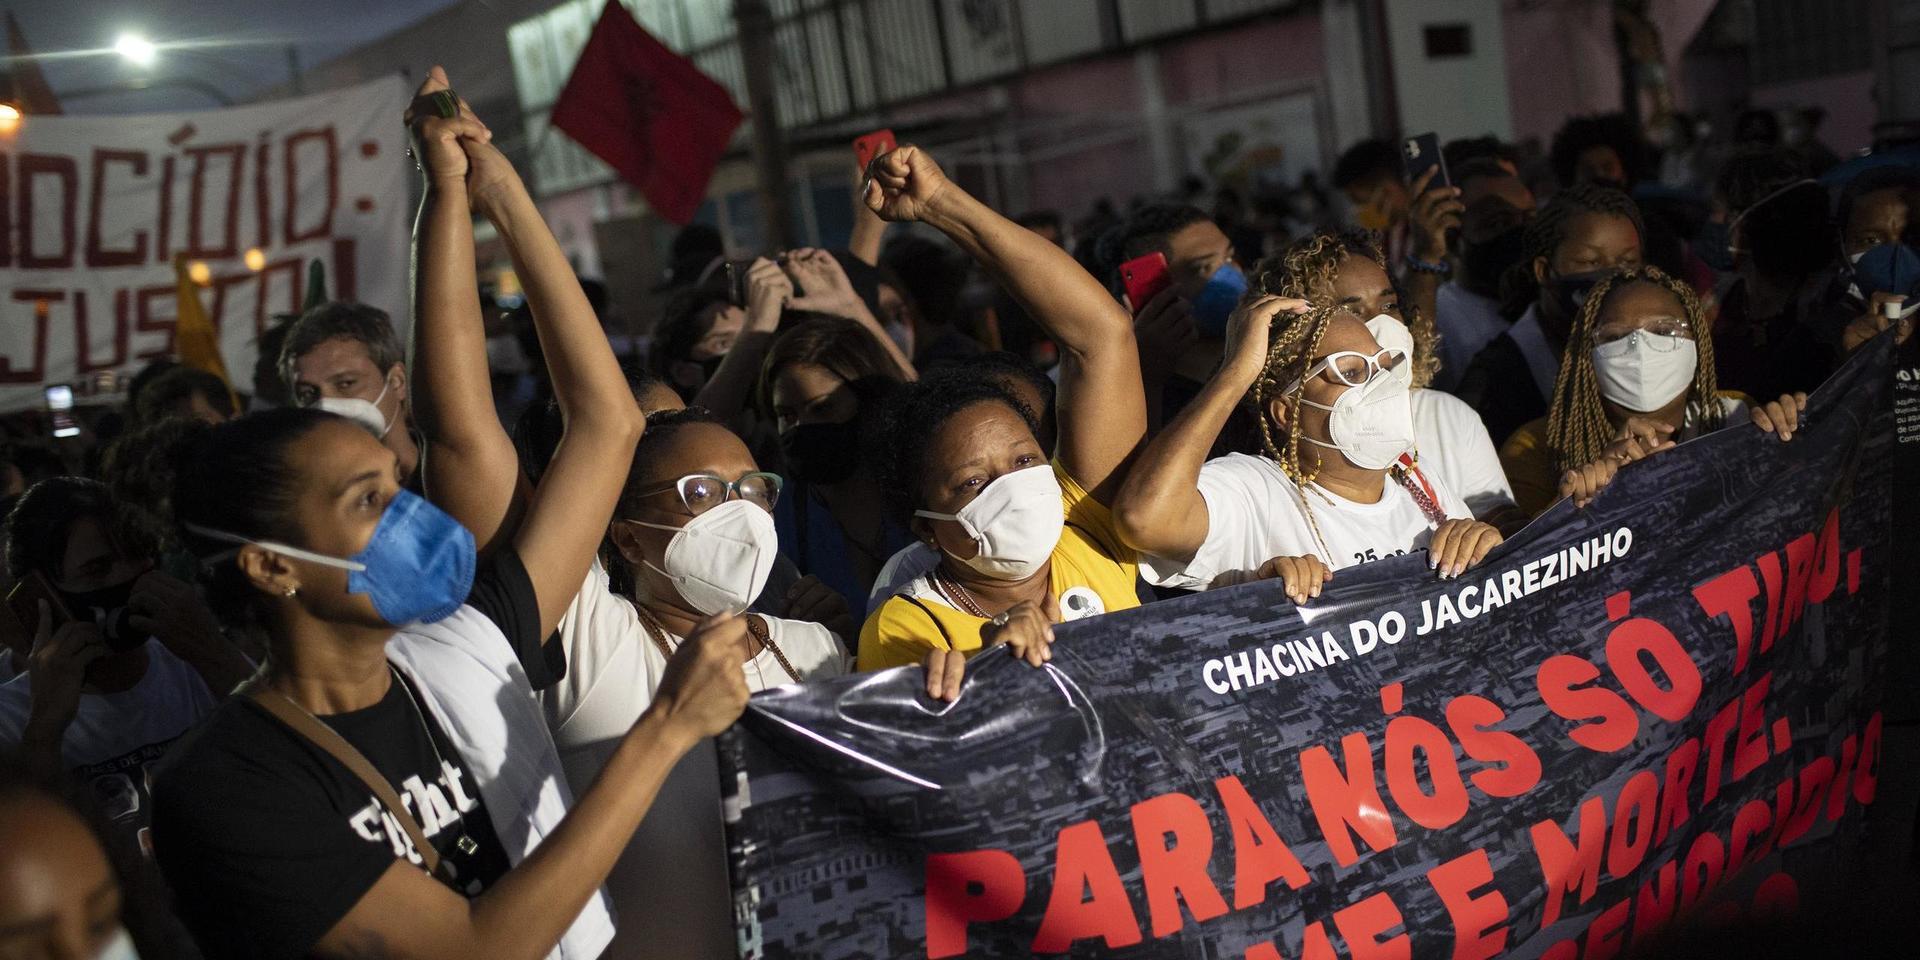 Boende demonstrerar mot polisens blodiga knarktillslag i torsdags, som krävde 28 liv i slumområdet Jacarezinho i Rio de Janeiro.